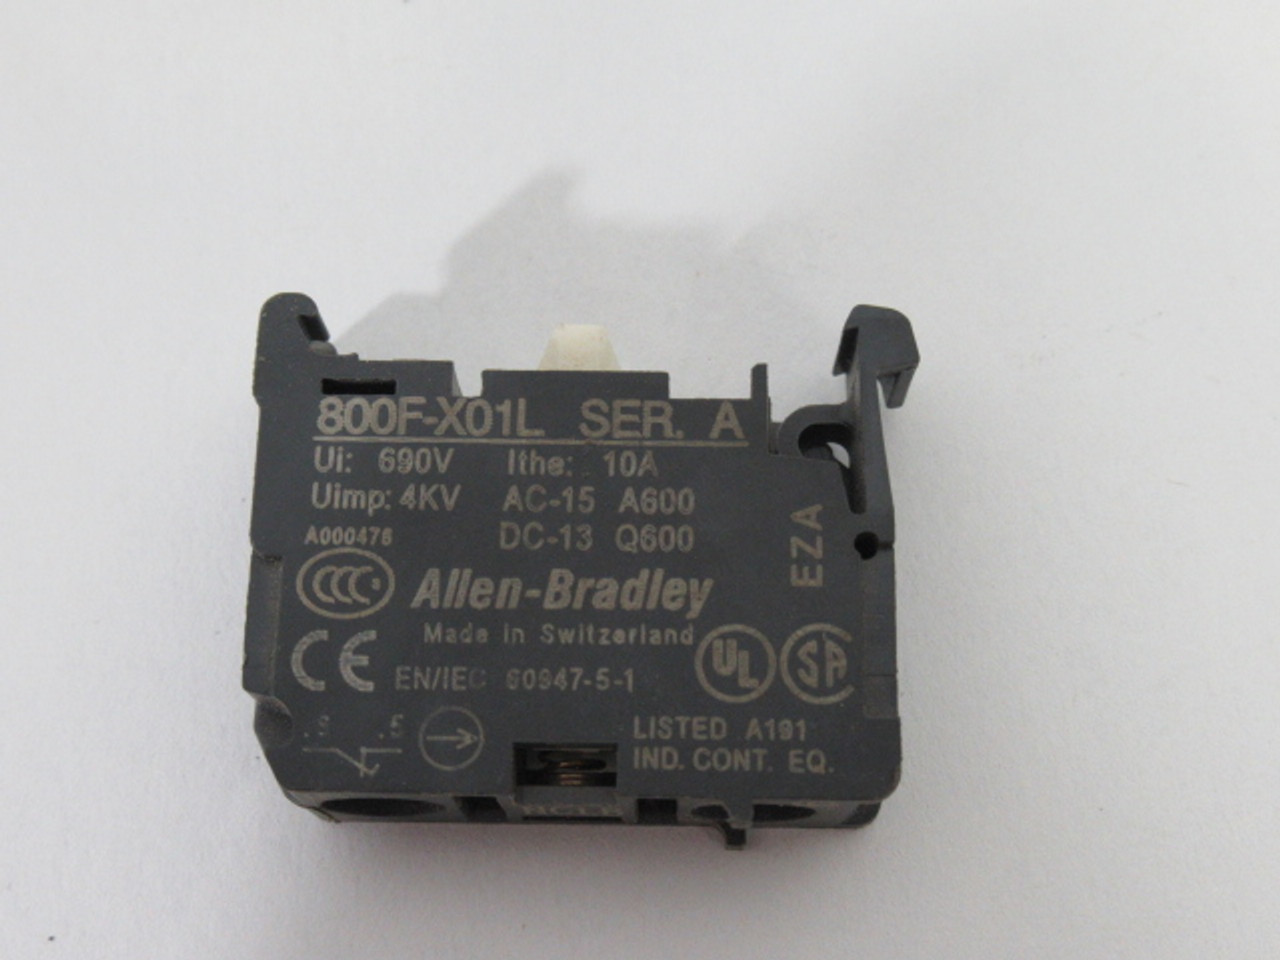 Allen-Bradley 800F-X01L Series A Push Button Contact Block 1NCLB USED